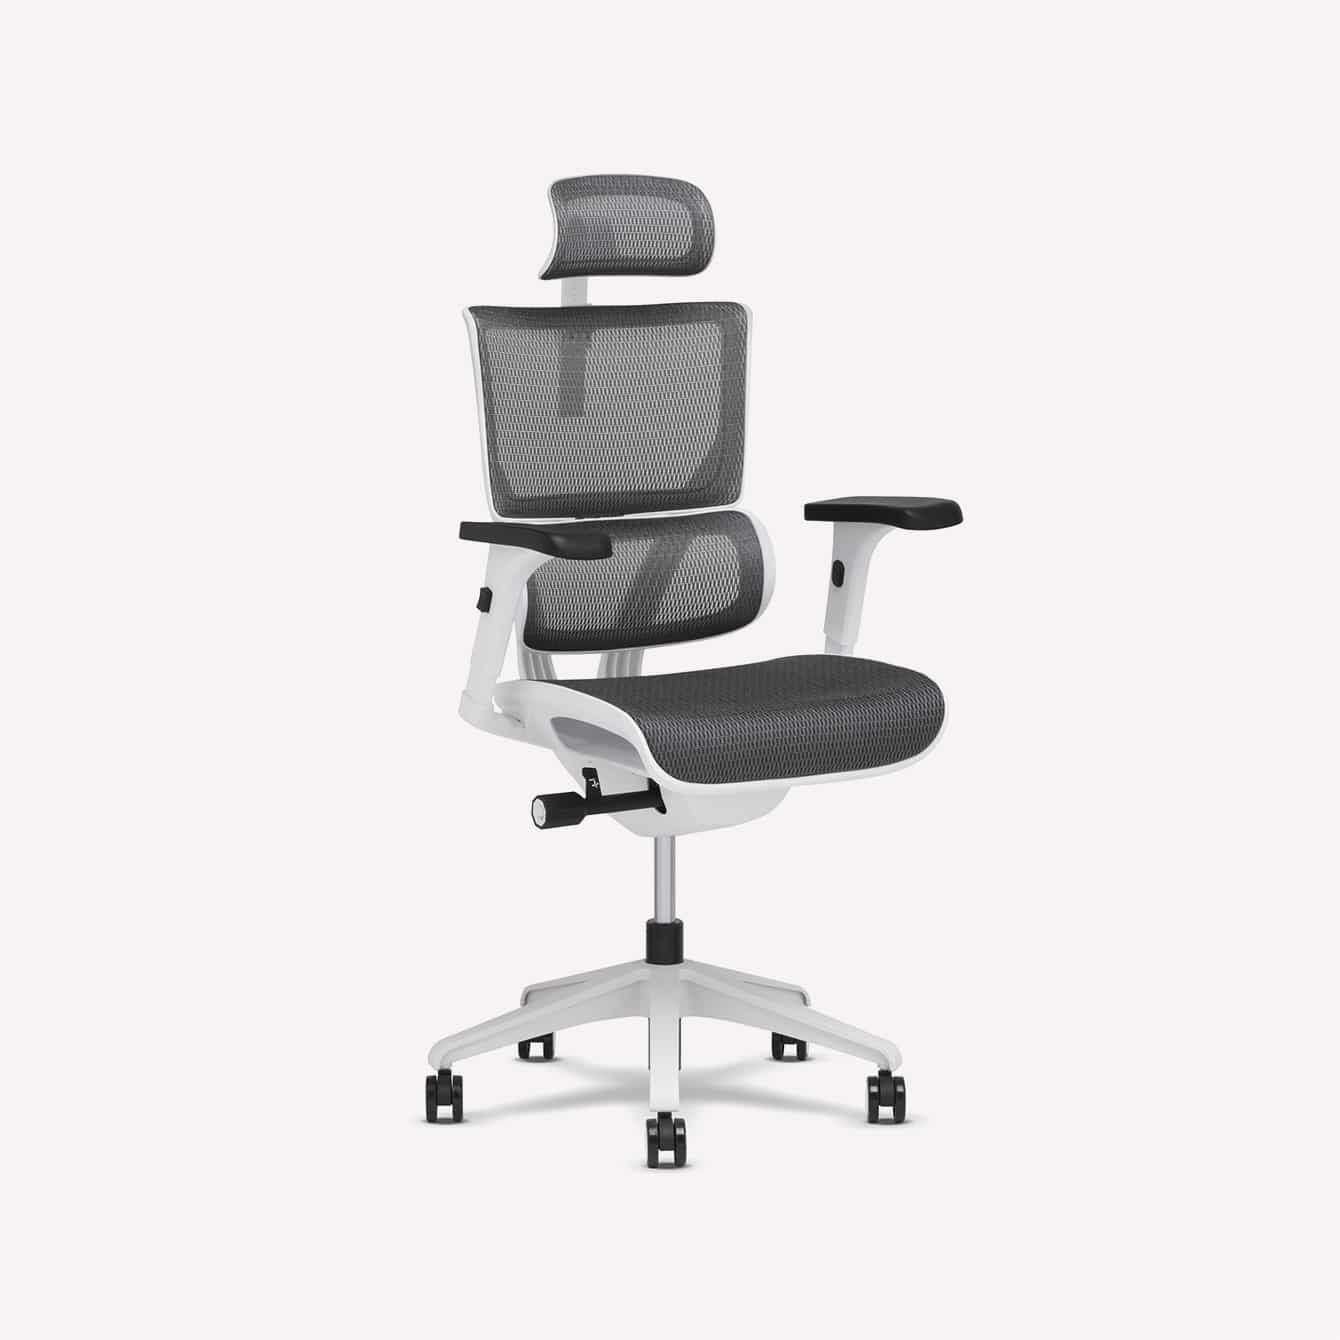 https://www.themodestman.com/wp-content/uploads/2021/06/Best-desk-office-chairs-featured.jpg